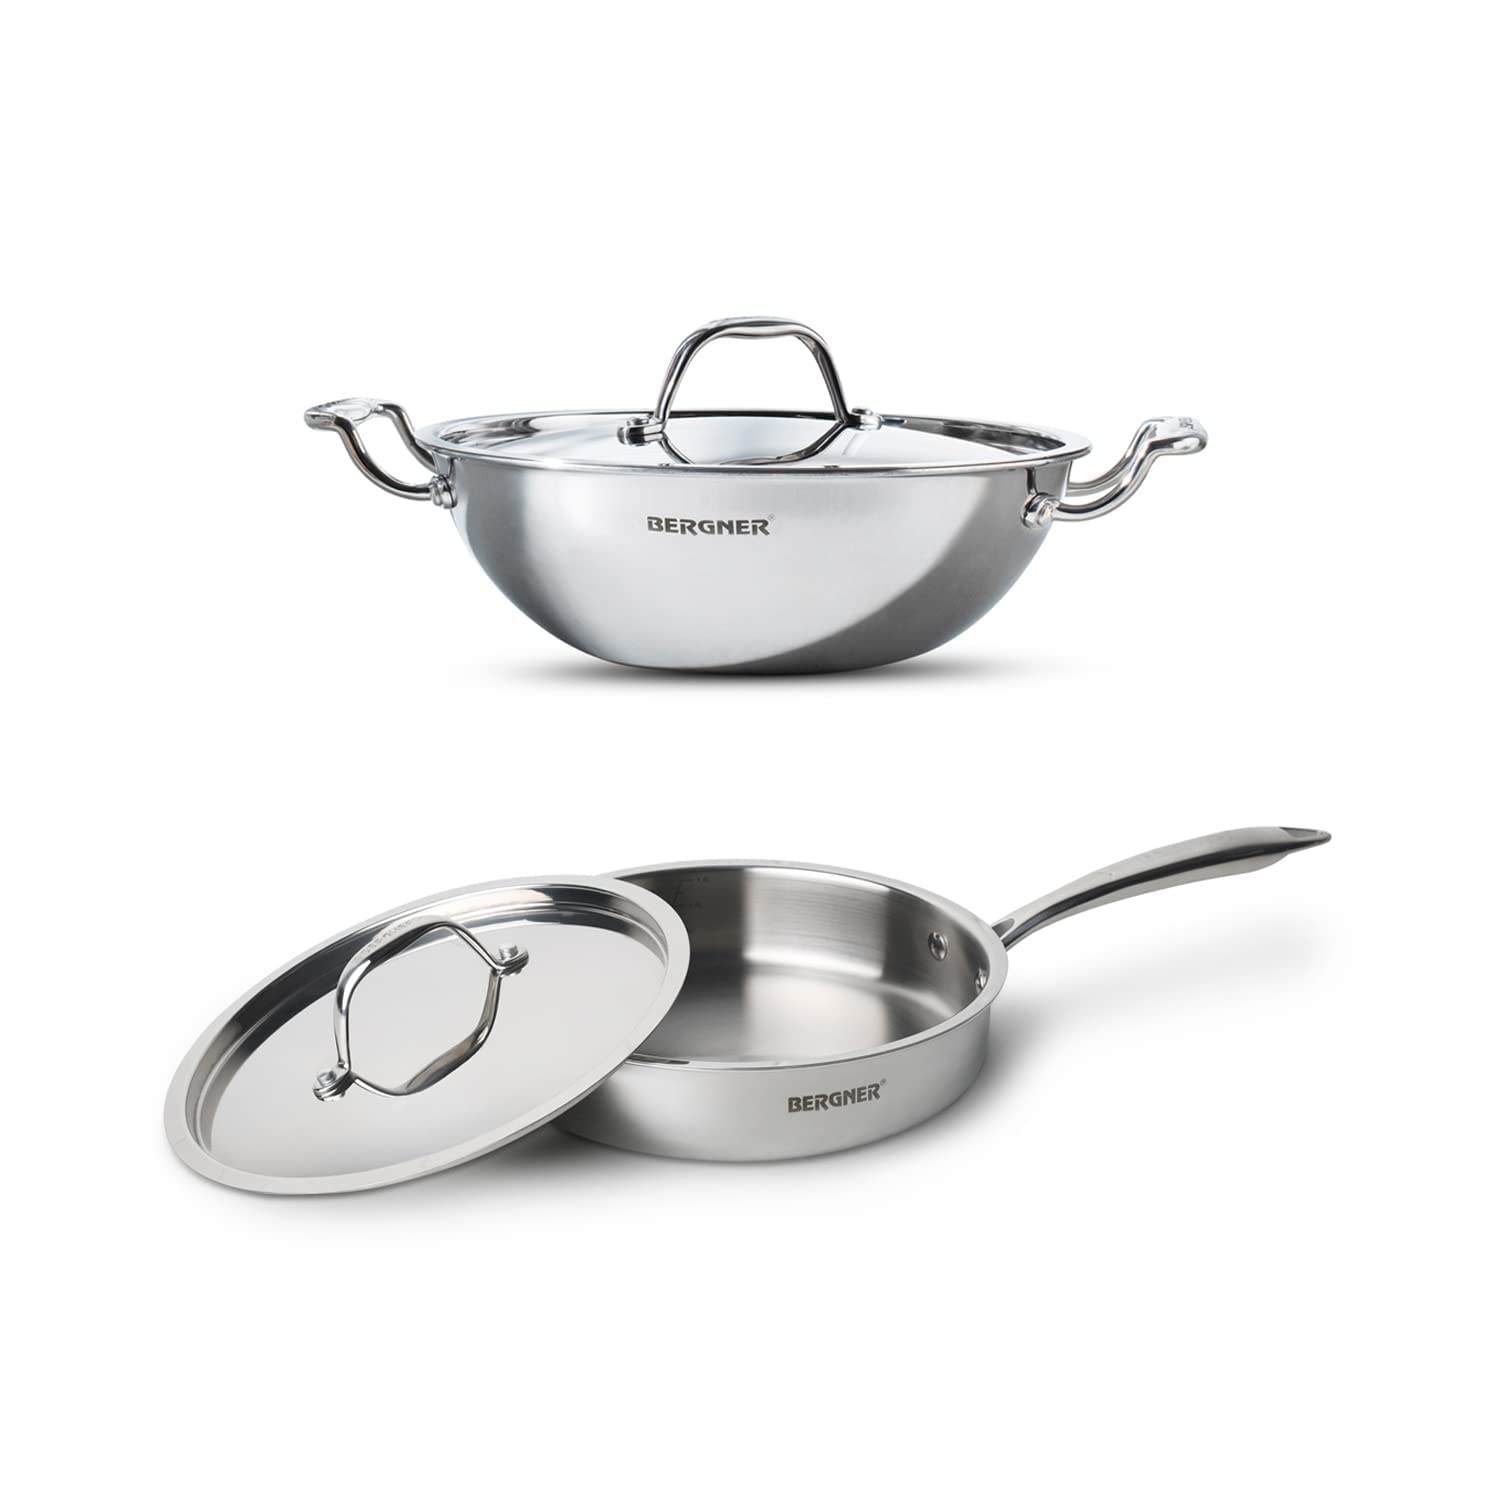 Bergner Triply Stainless Steel Cookware Combo - 22cm Kadai & 22cm Saute Pan